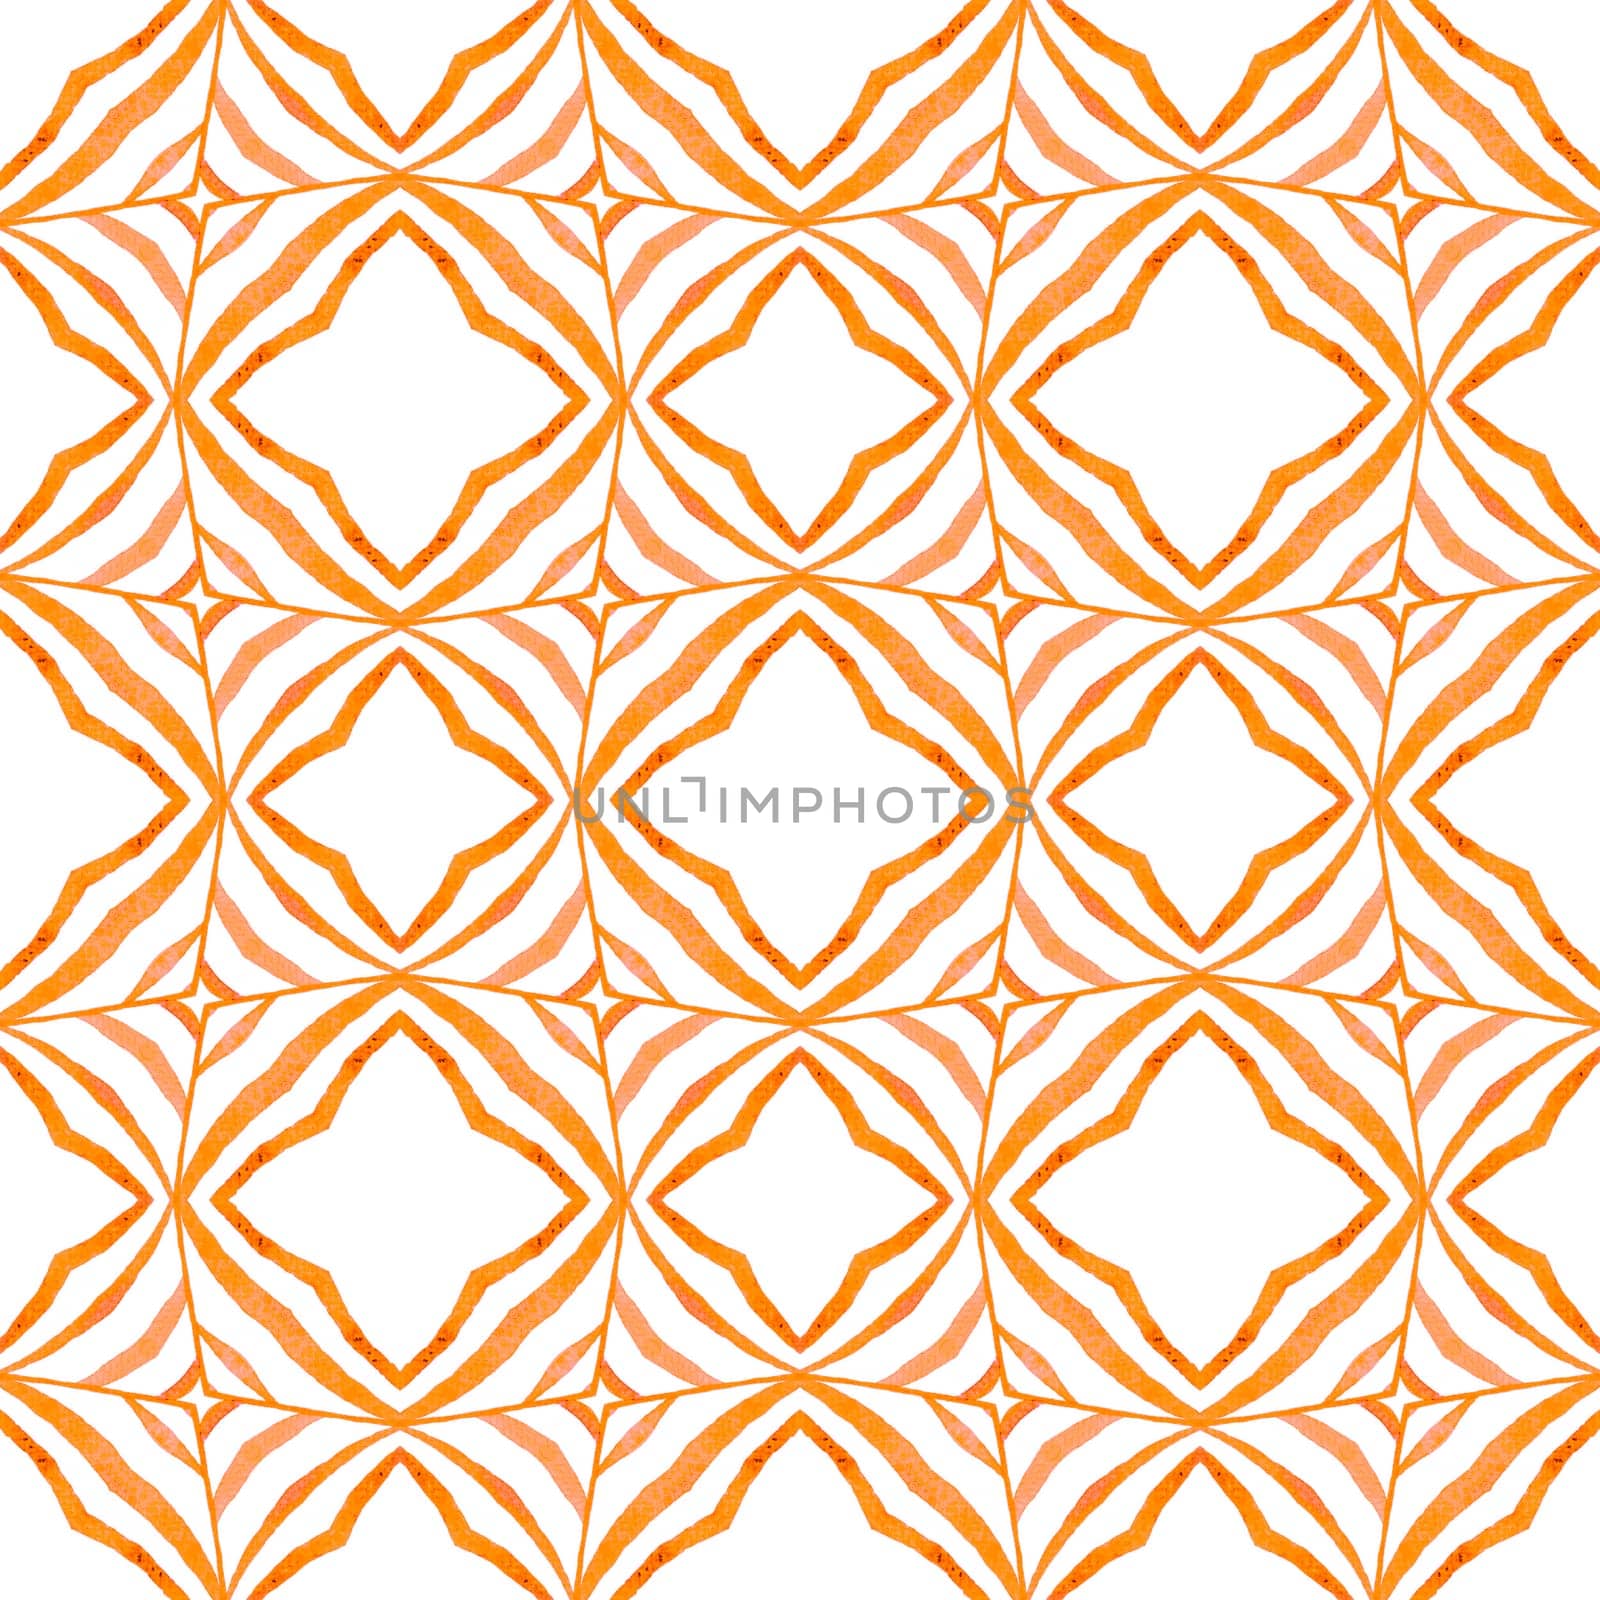 Textile ready artistic print, swimwear fabric, wallpaper, wrapping. Orange positive boho chic summer design. Chevron watercolor pattern. Green geometric chevron watercolor border.